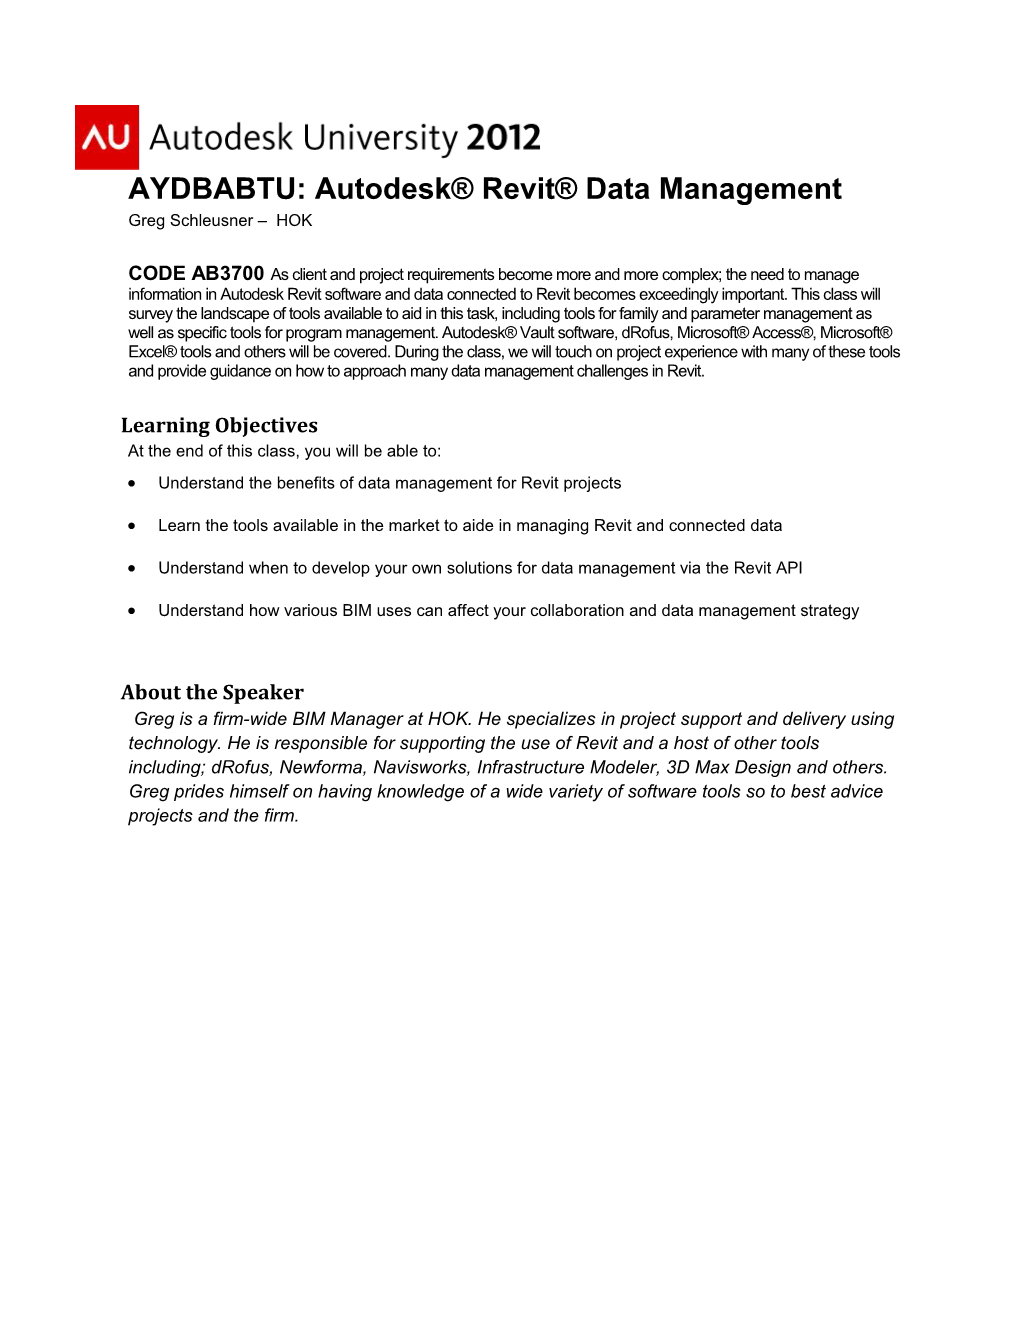 AYDBABTU: Autodesk Revit Data Management